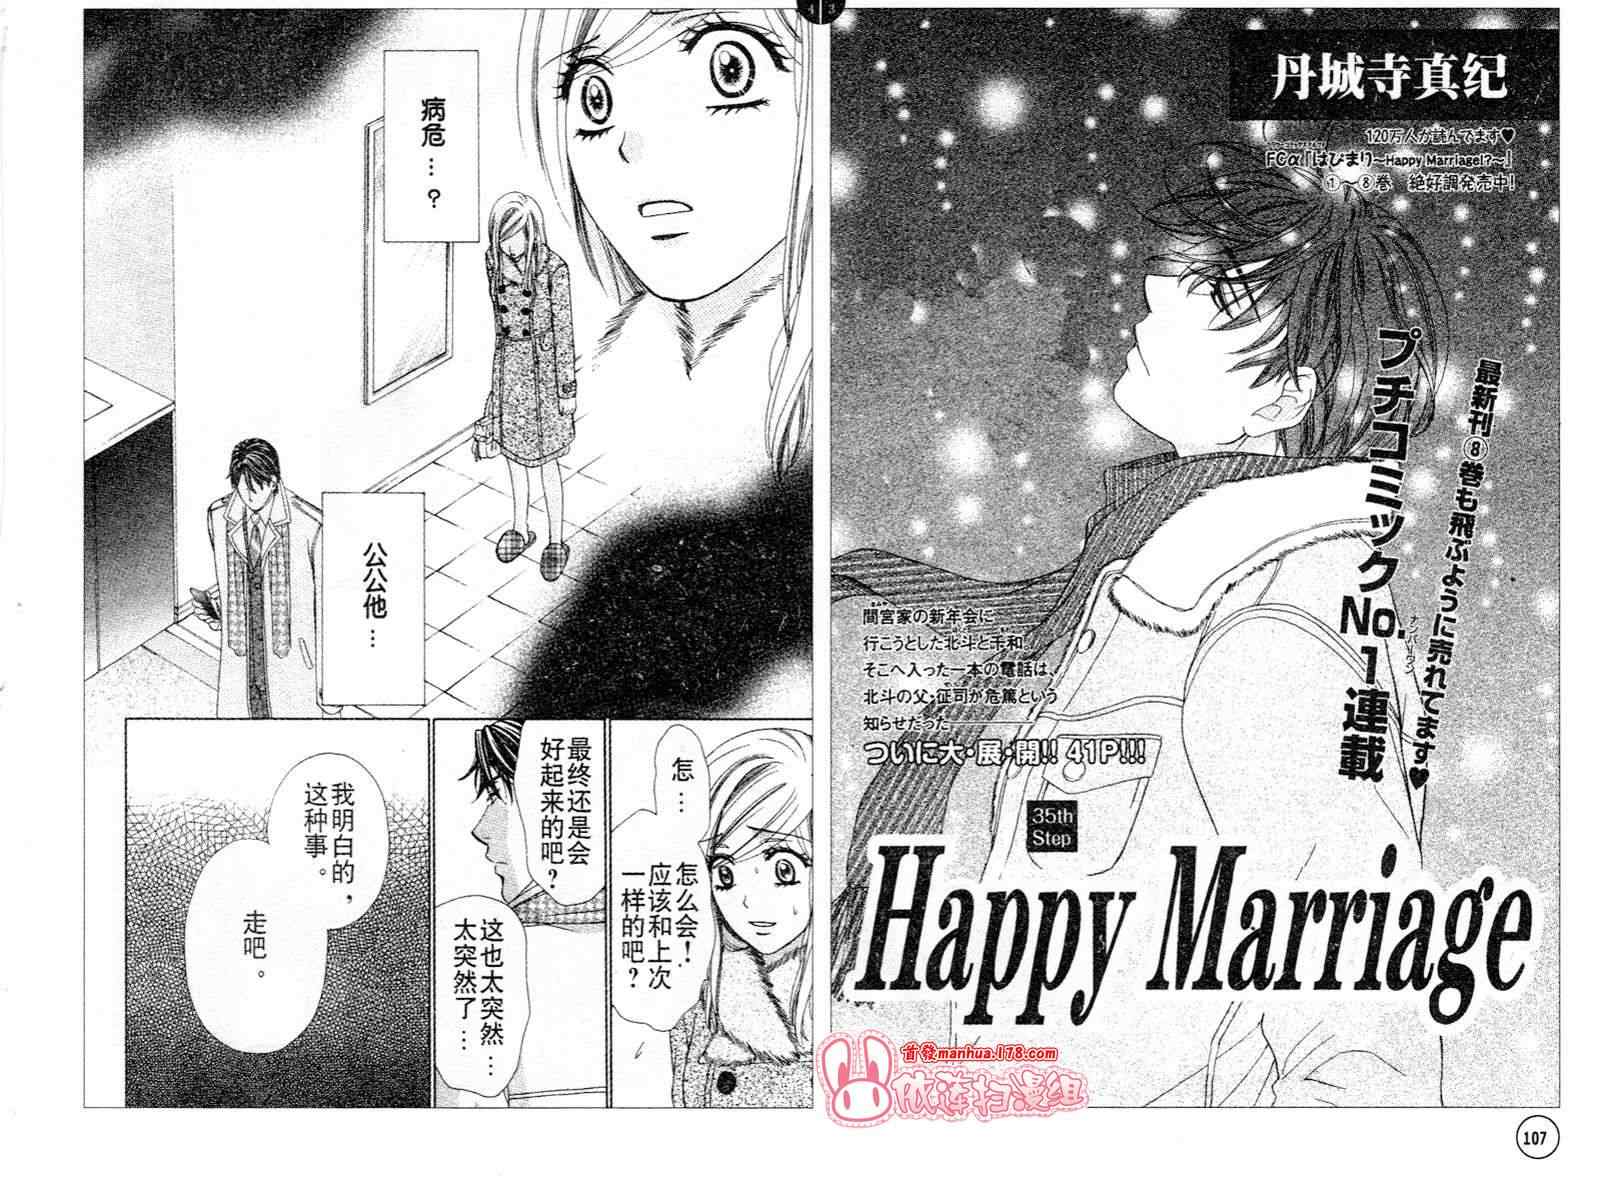 《快乐婚礼》漫画 happy marriage35集